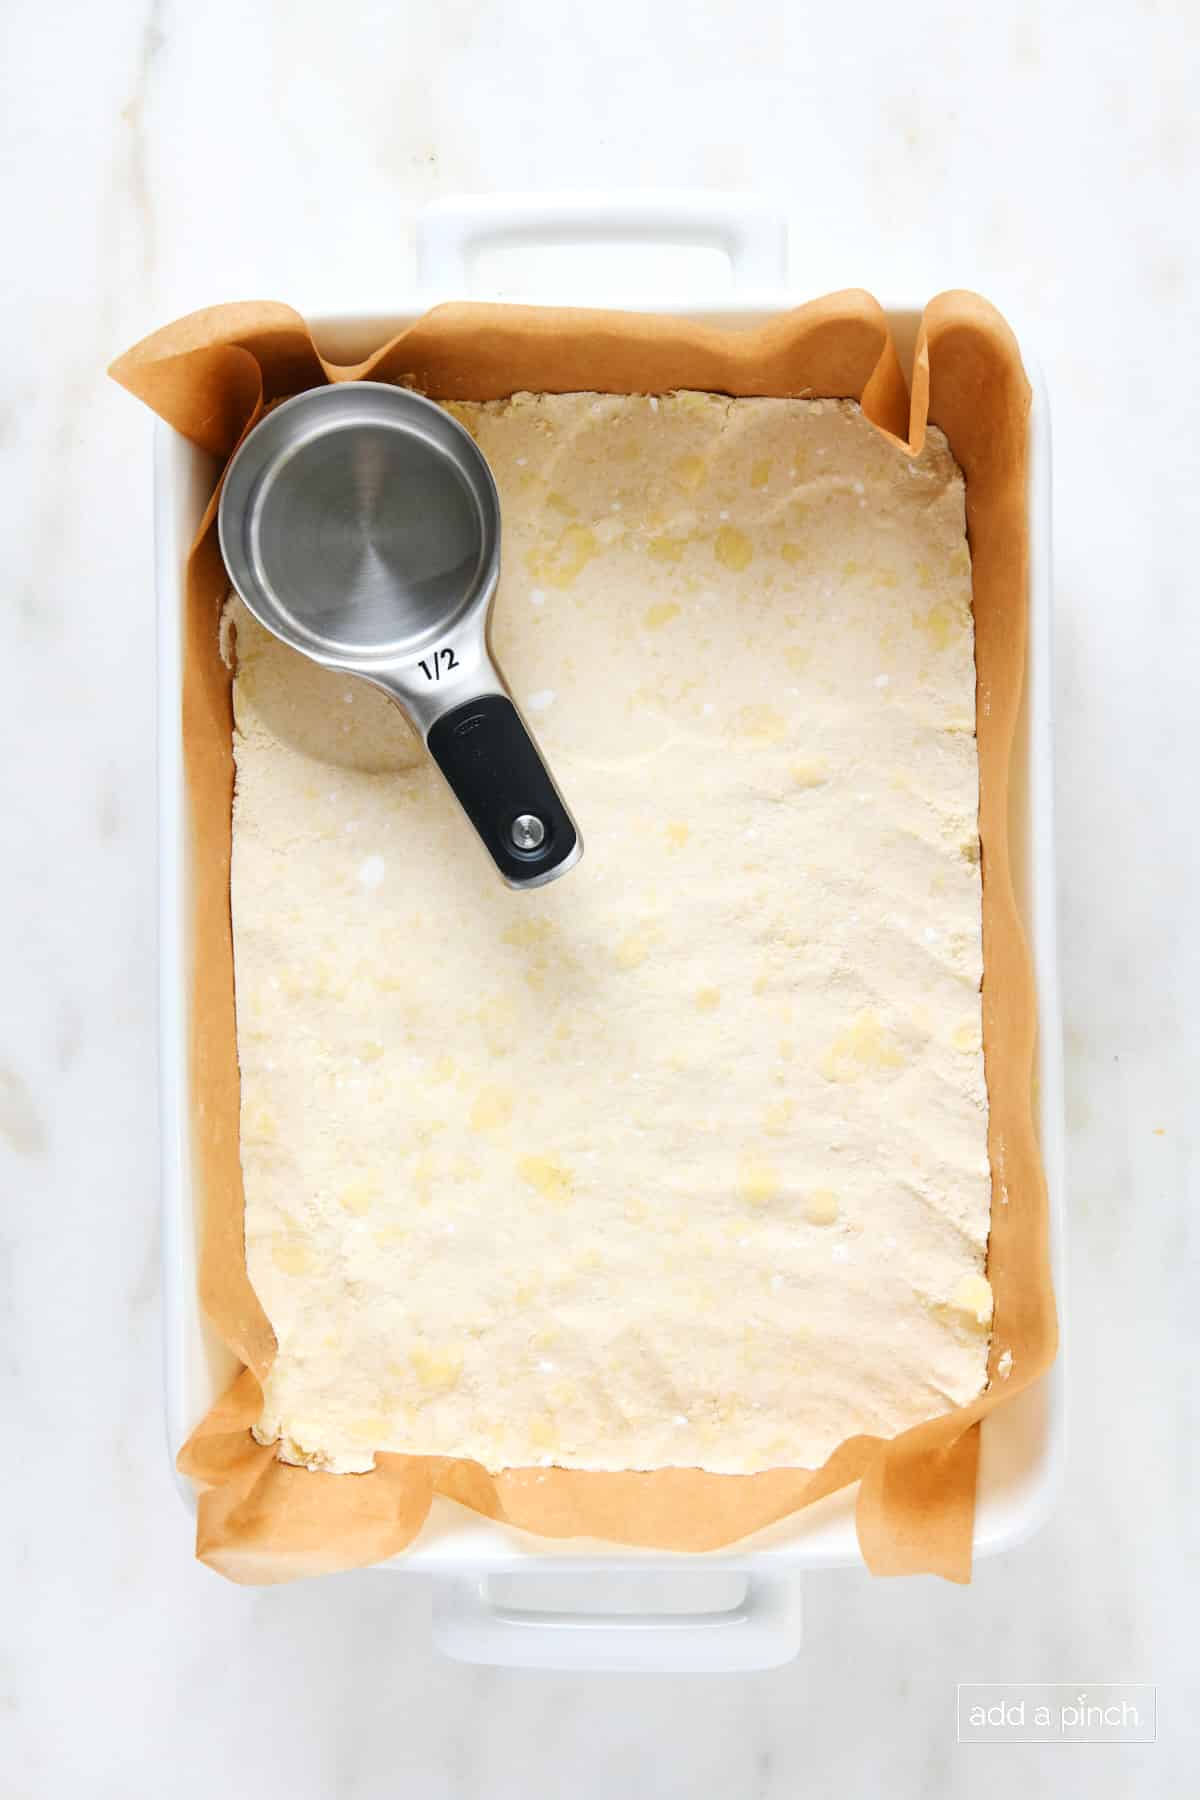 Press shortbread crust mixture into a parchment lined baking dish.